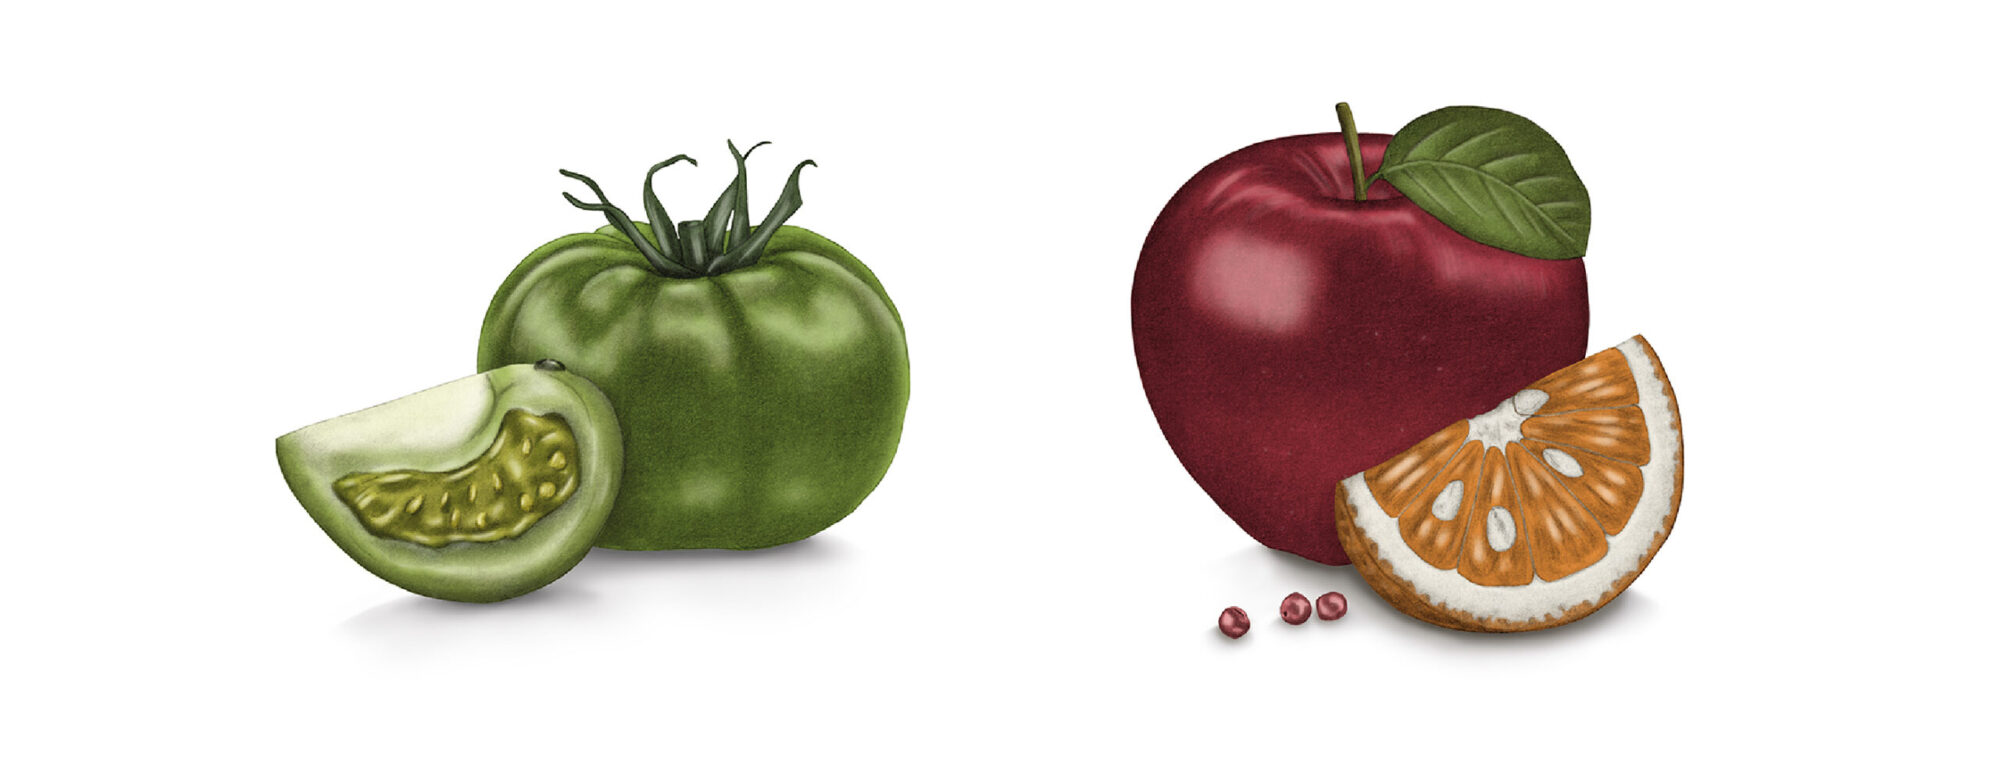 giulia-borsi-illustration-label-design-tomatoes-apples